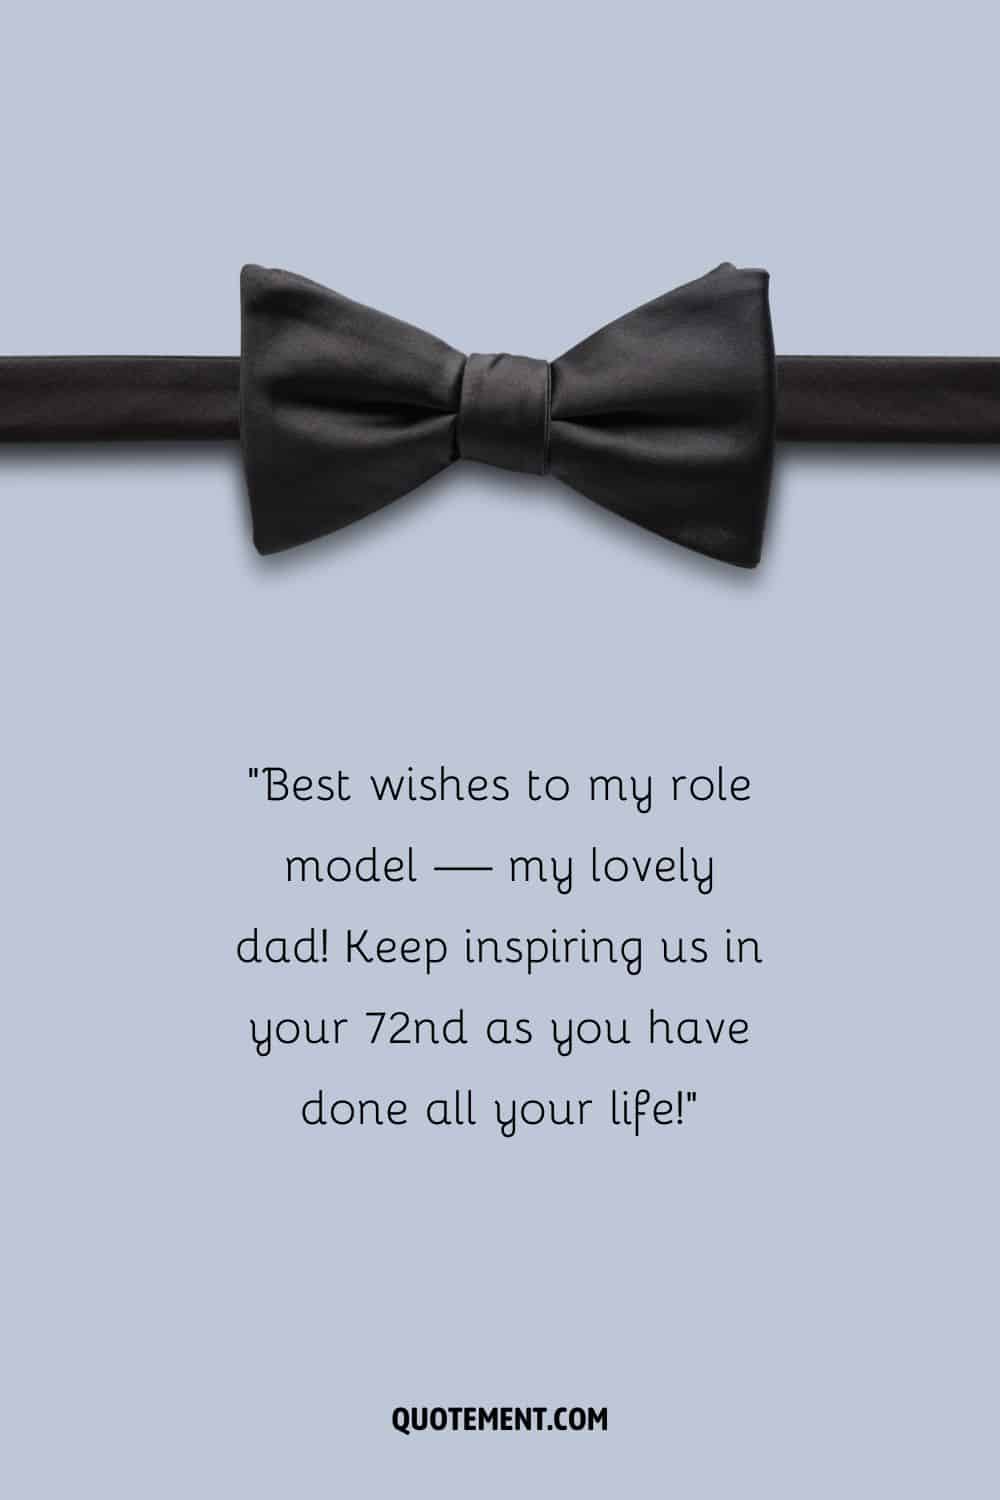 black bow tie representing happy birthday wish for dad turning 72